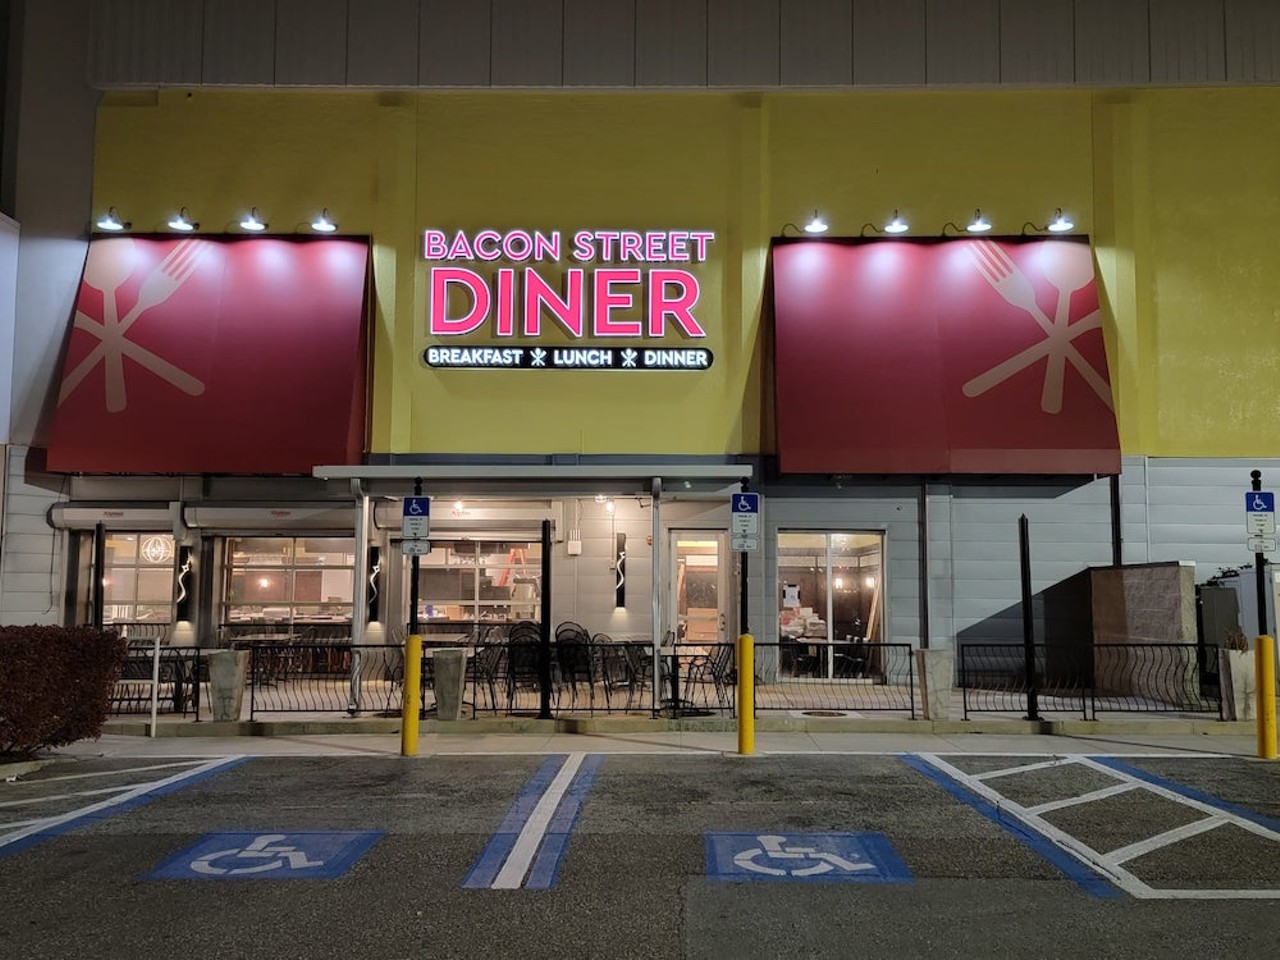 Best Breakfast
Bacon Street Diner
Finalists: The Corner Skillet, Cafe & Grill